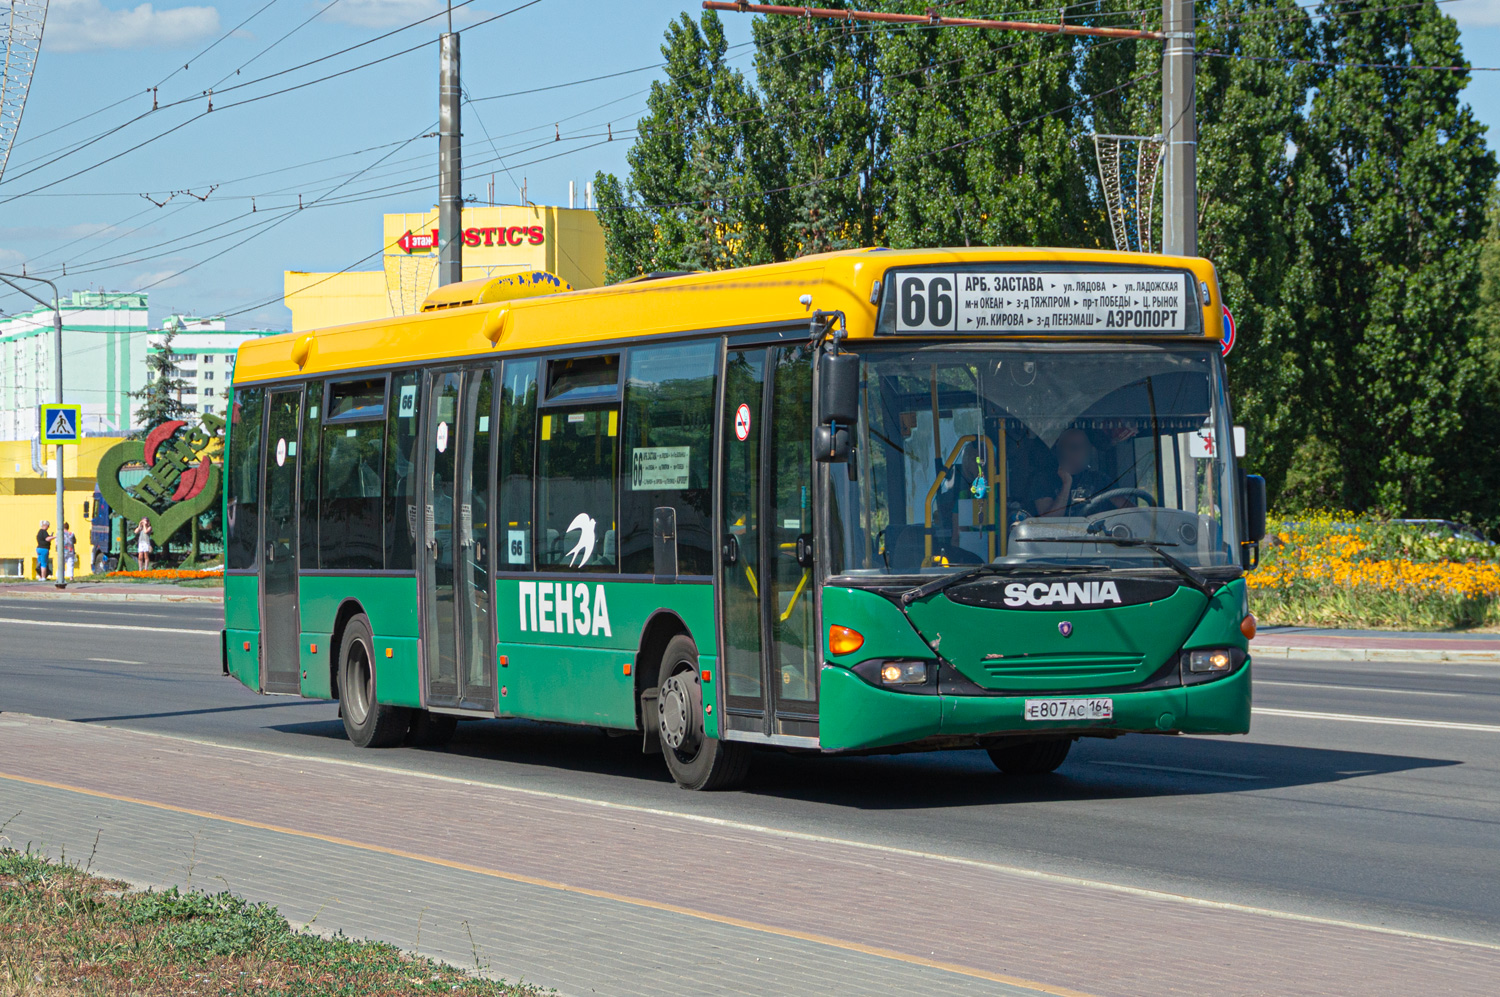 Penza region, Scania OmniLink I (Scania-St.Petersburg) # Е 807 АС 164